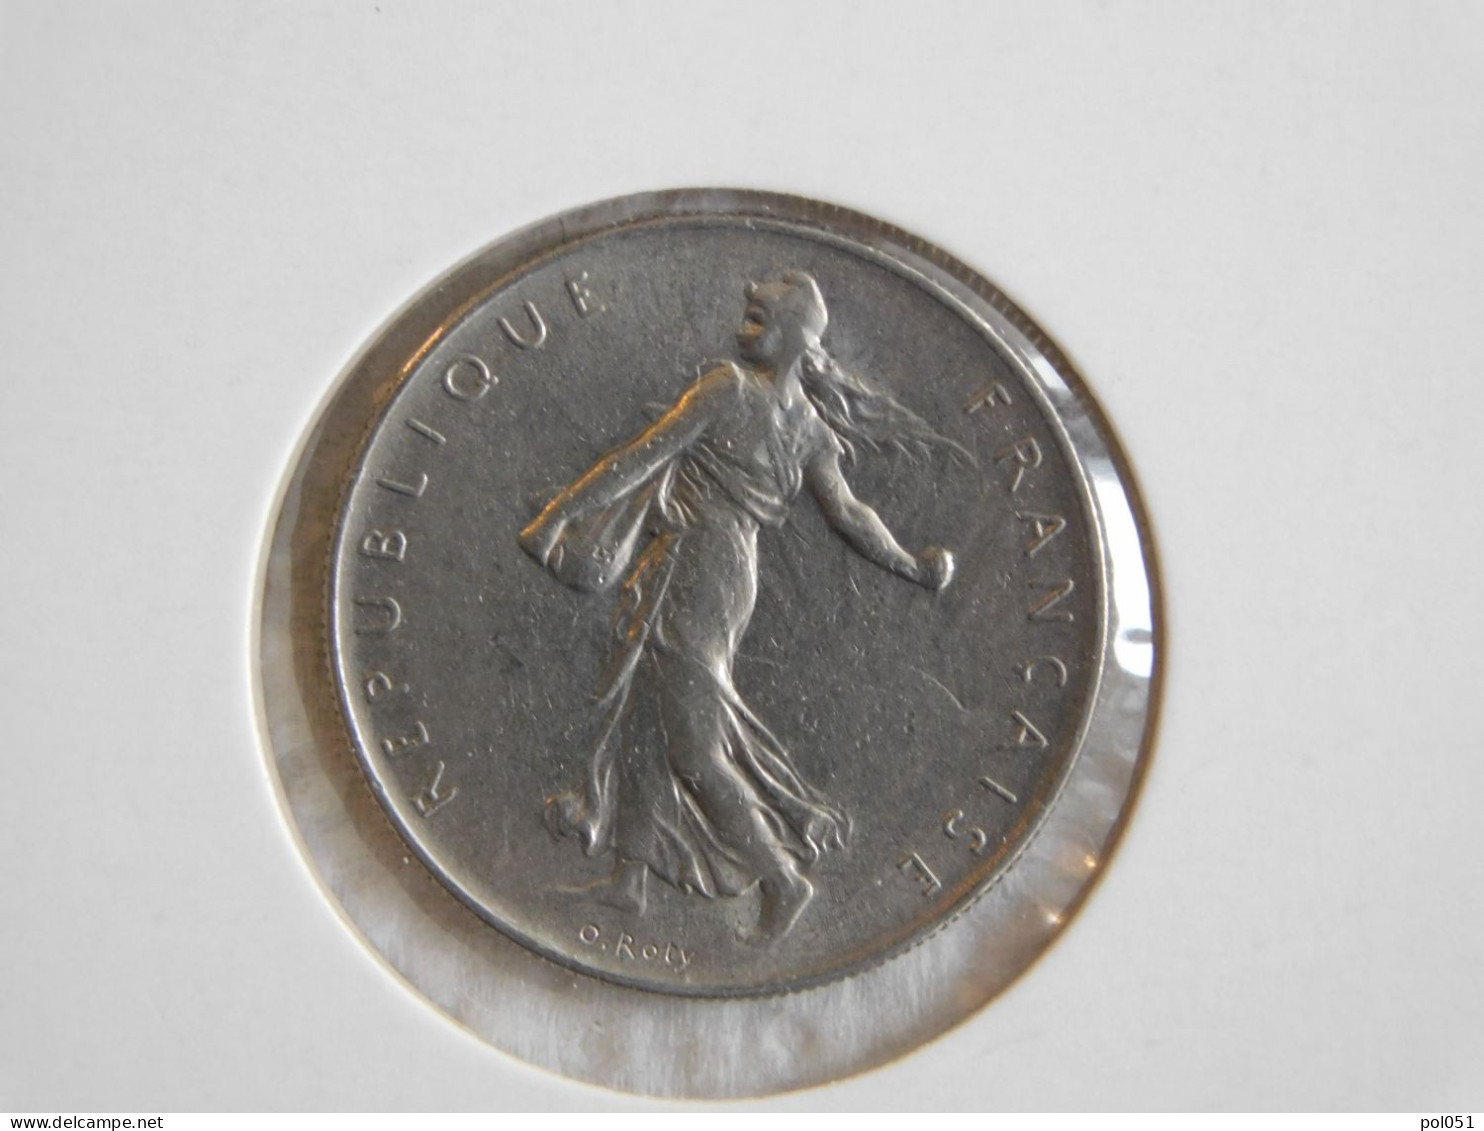 France 1 Franc 1962 SEMEUSE, NICKEL (712) - 1 Franc